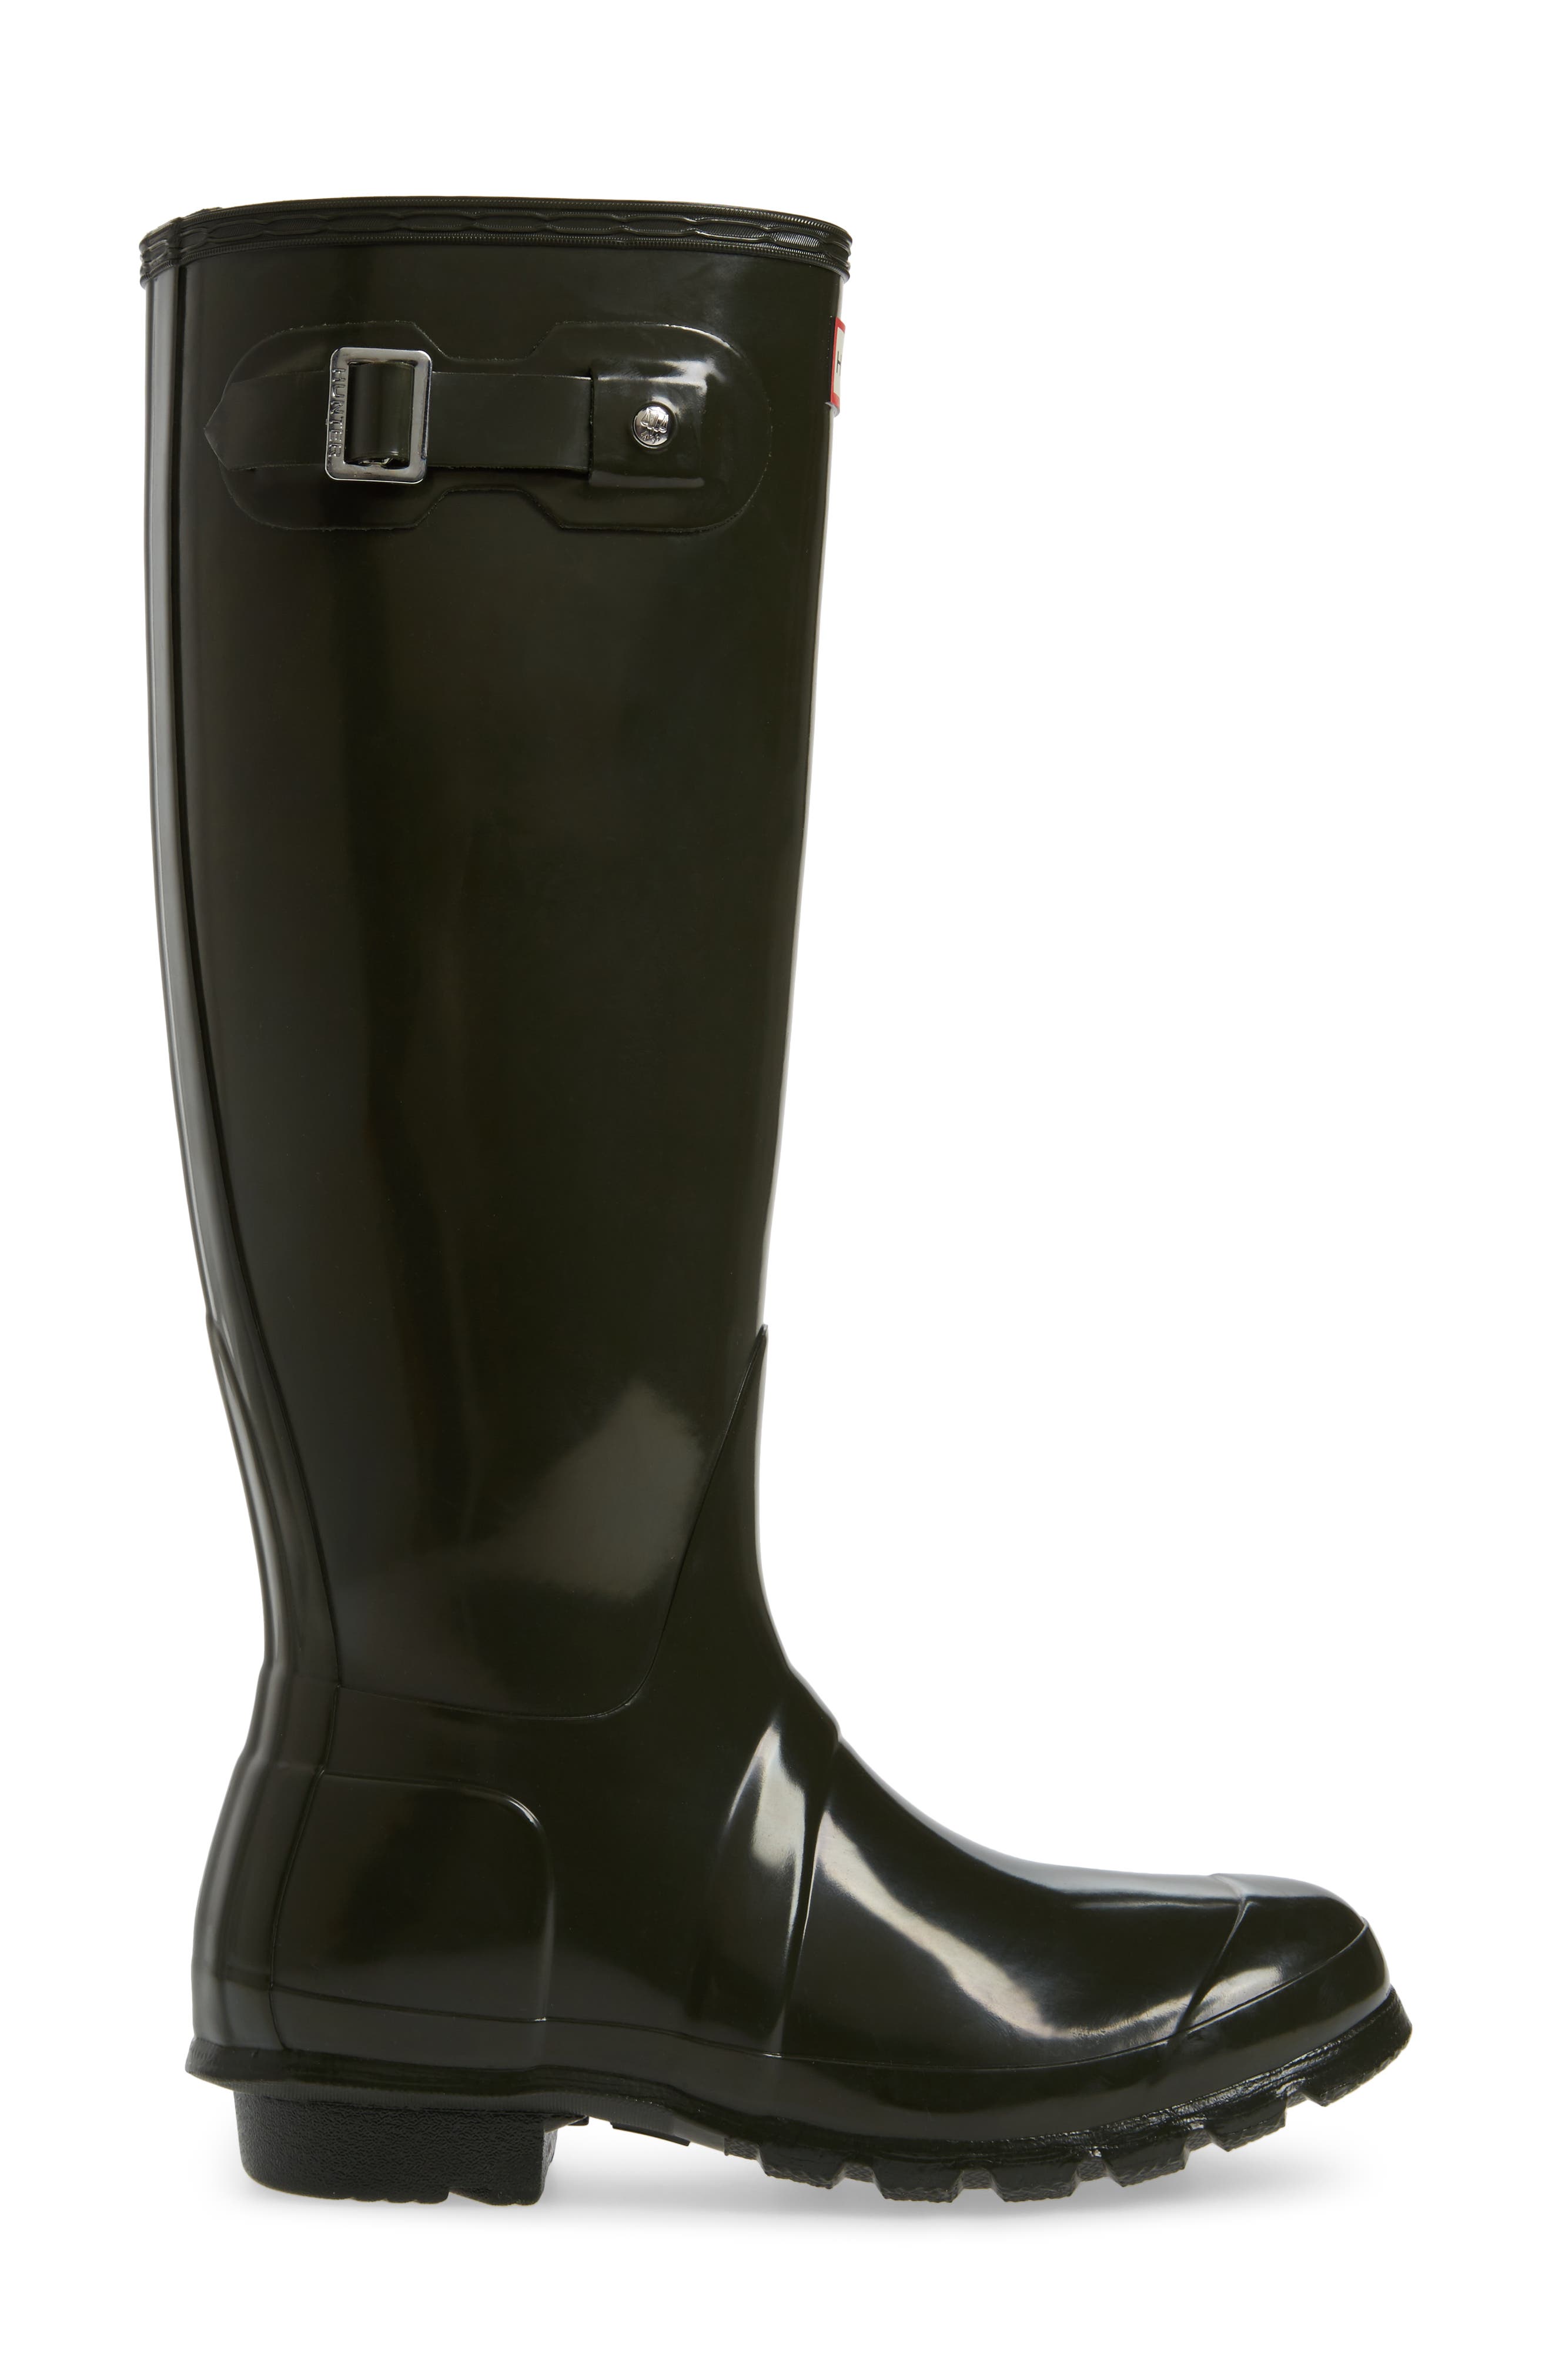 hunter rain boots womens size 11